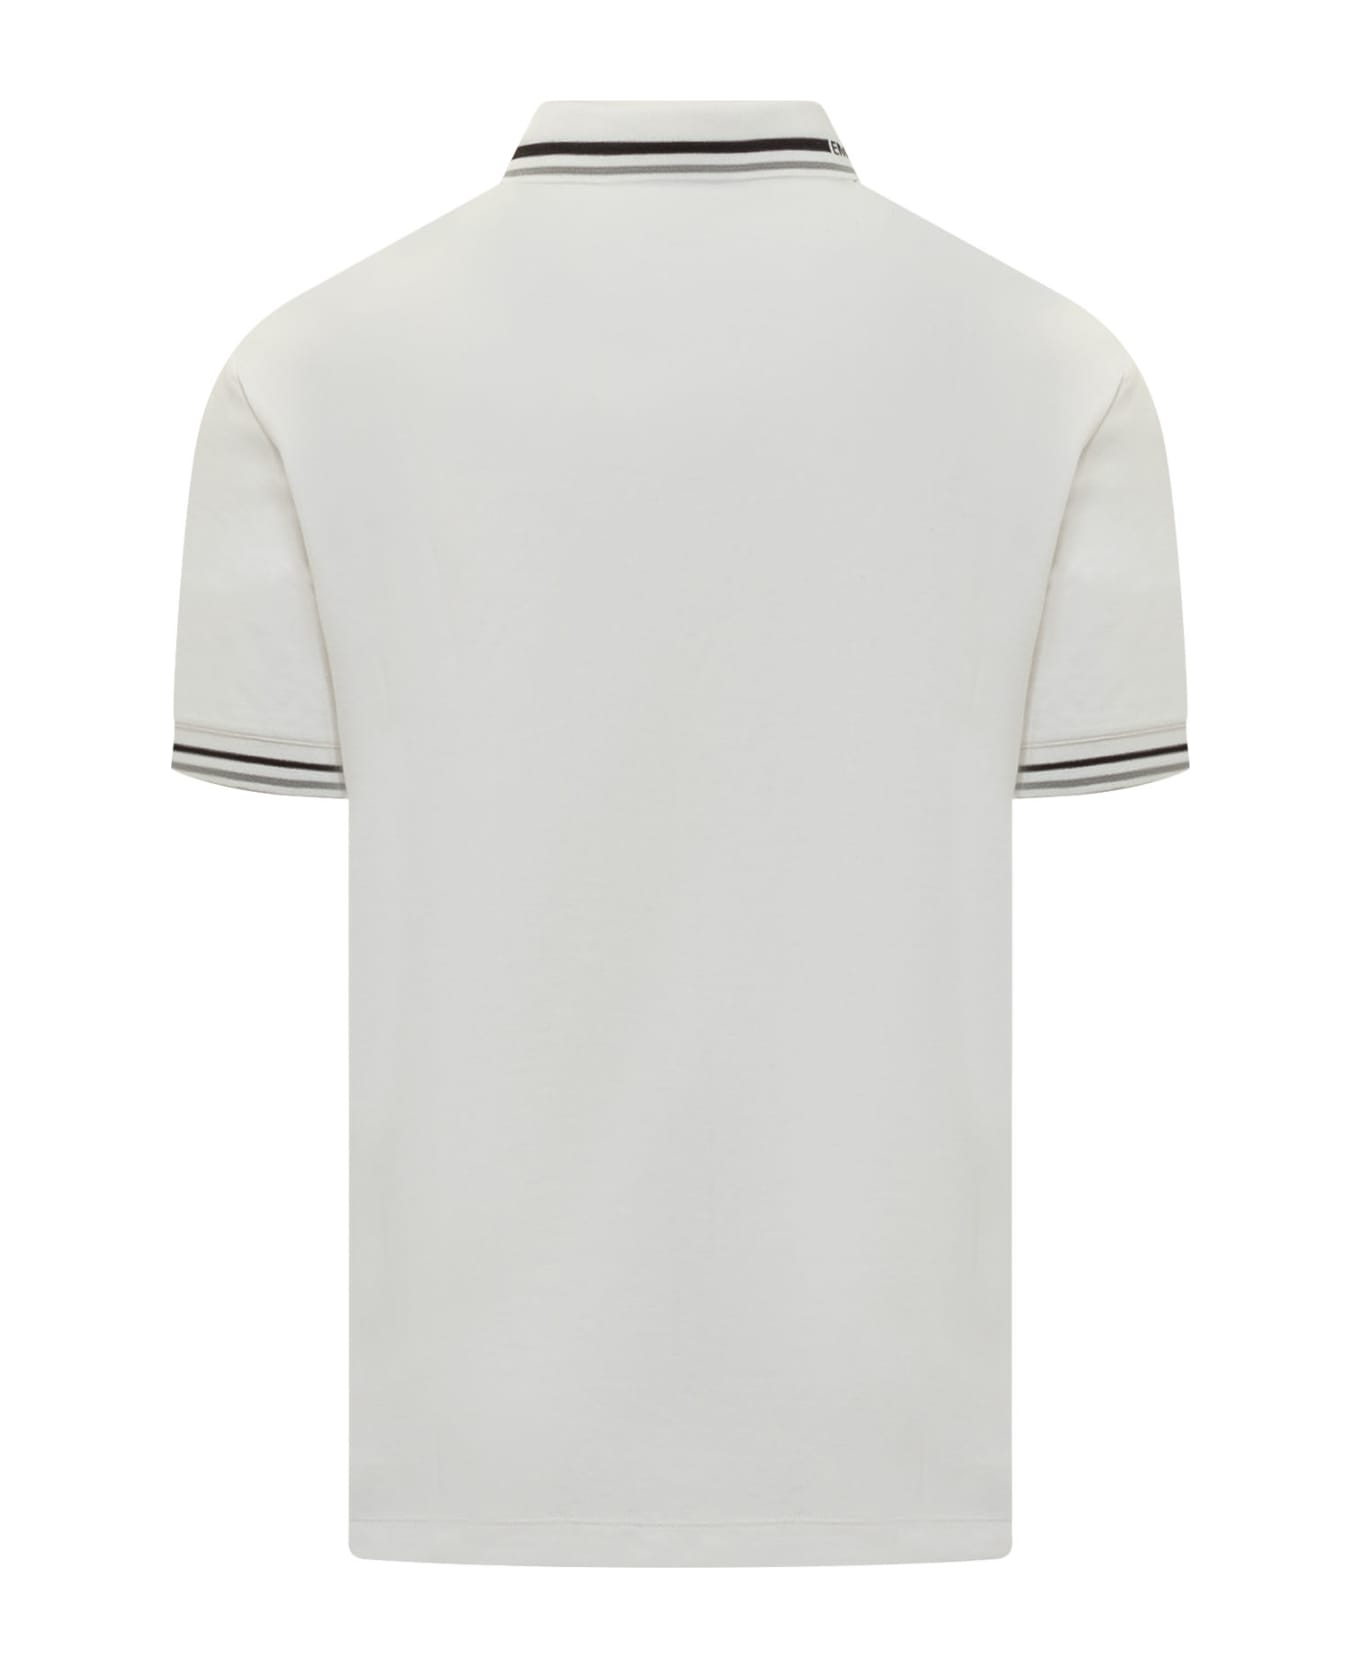 Emporio Armani Polo Shirt With Logo - Neck Off White